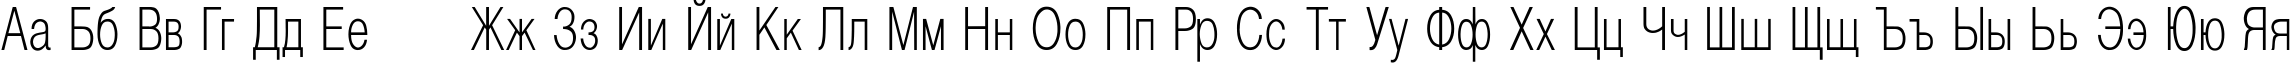 Пример написания русского алфавита шрифтом Helvetica_Condenced-Normal